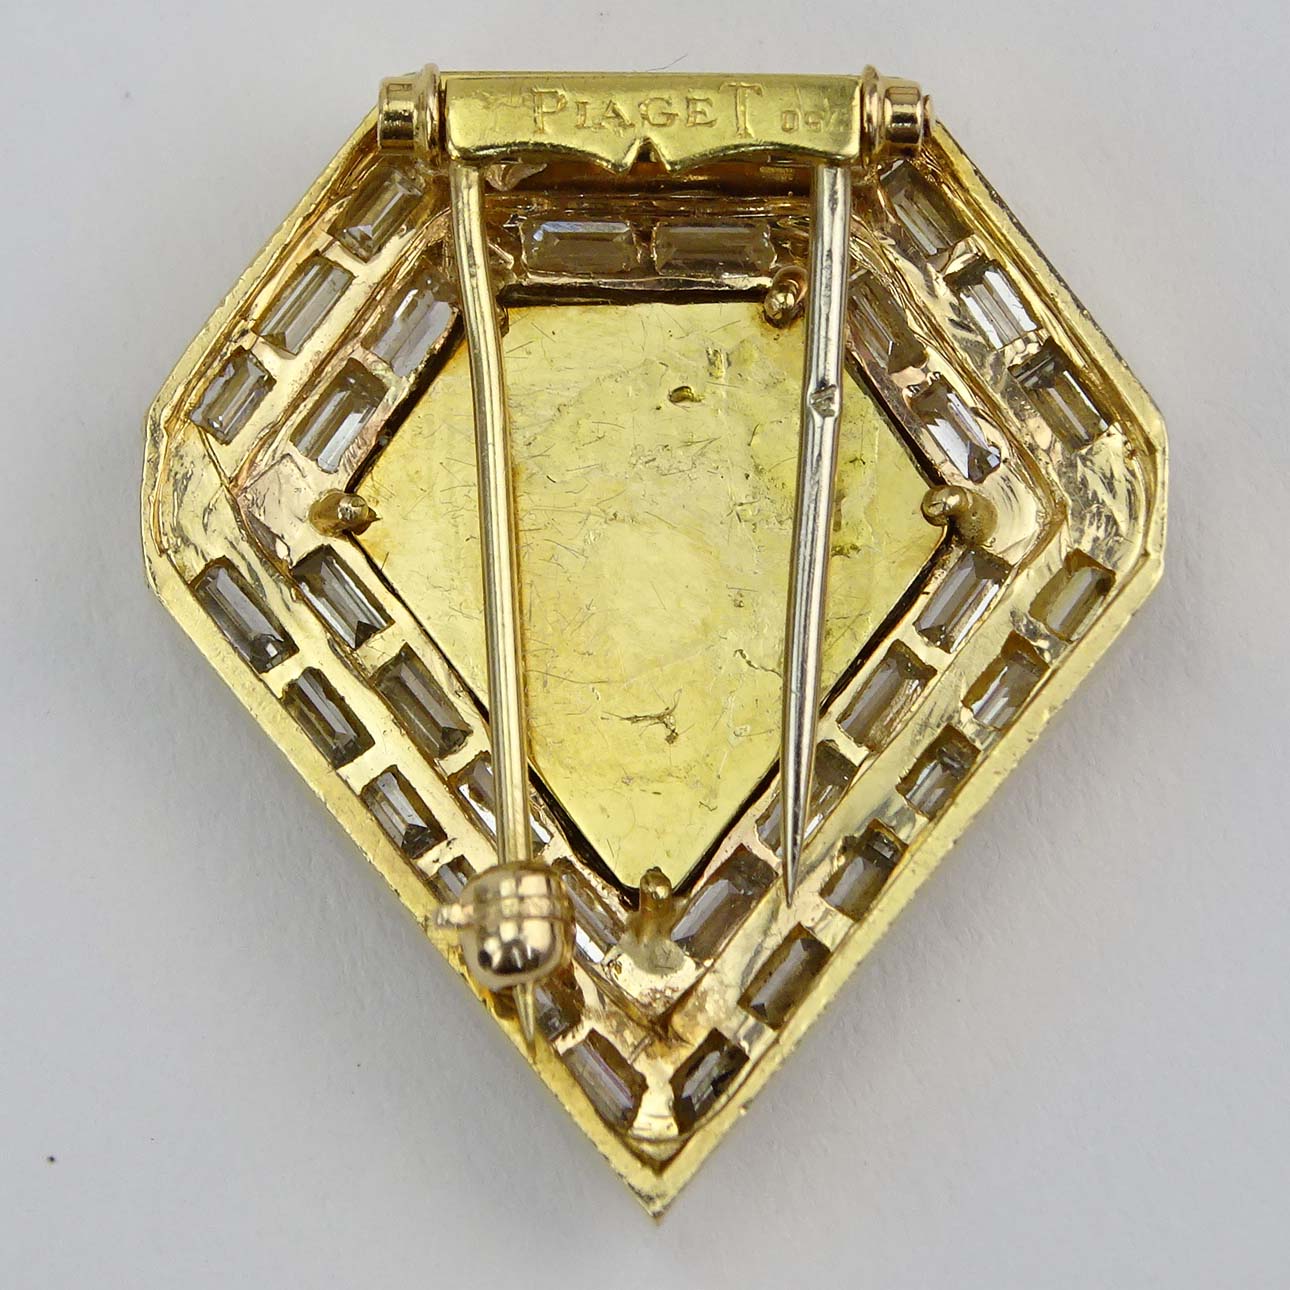 Vintage Piaget Approx. 3.25 Carat Baguette Cut Diamond, Black Onyx and 18 karat Yellow Gold Clip Brooch.